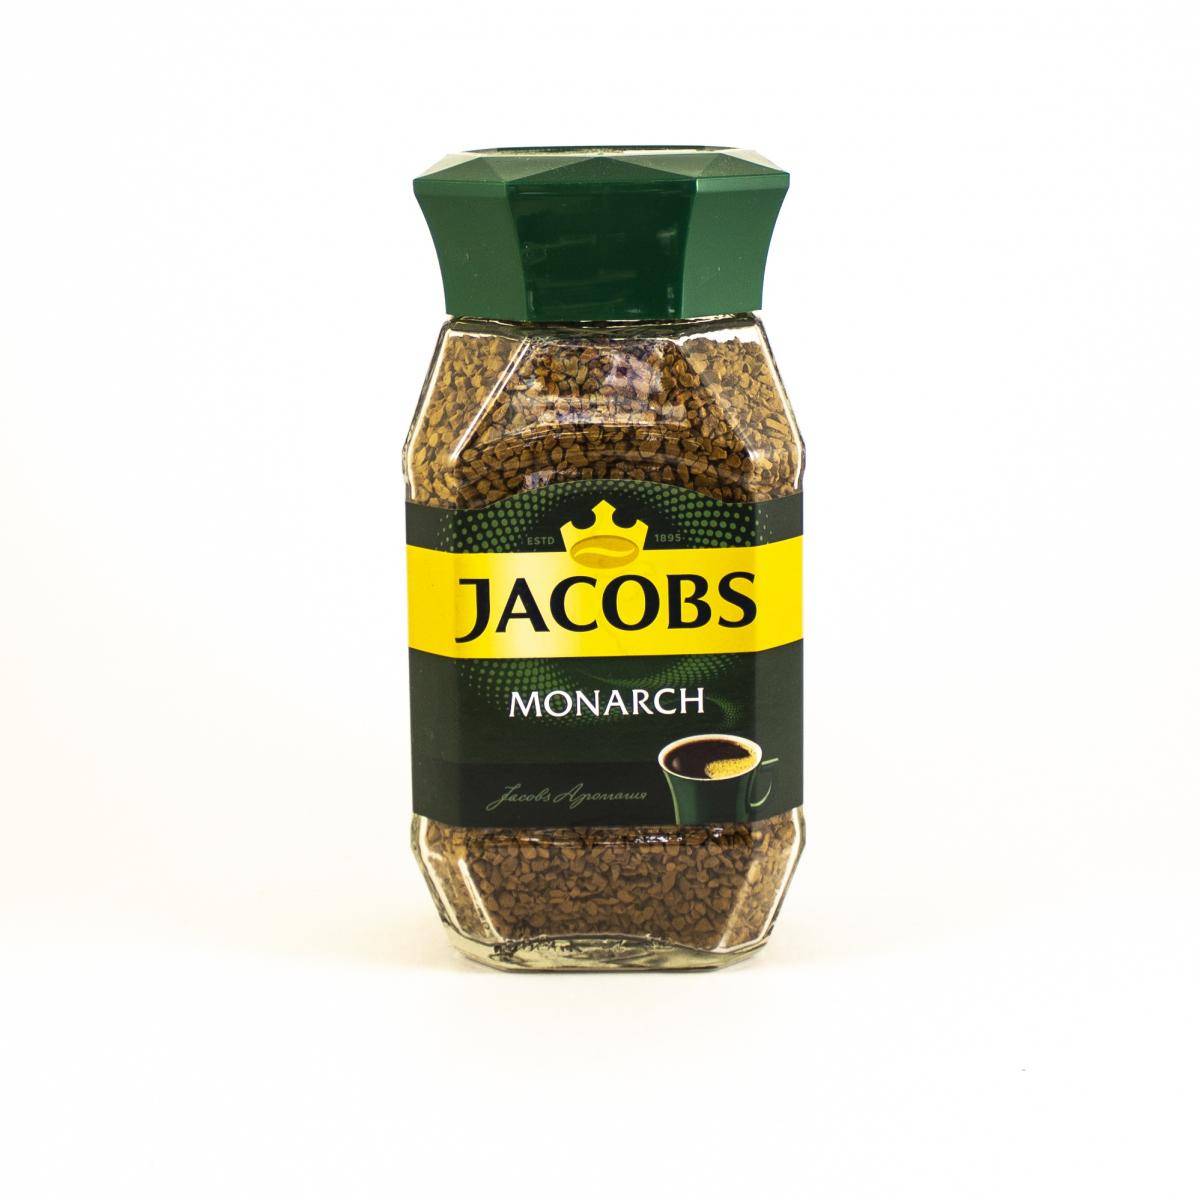 Кофе jacobs, ассортимент, характеристики, особенности